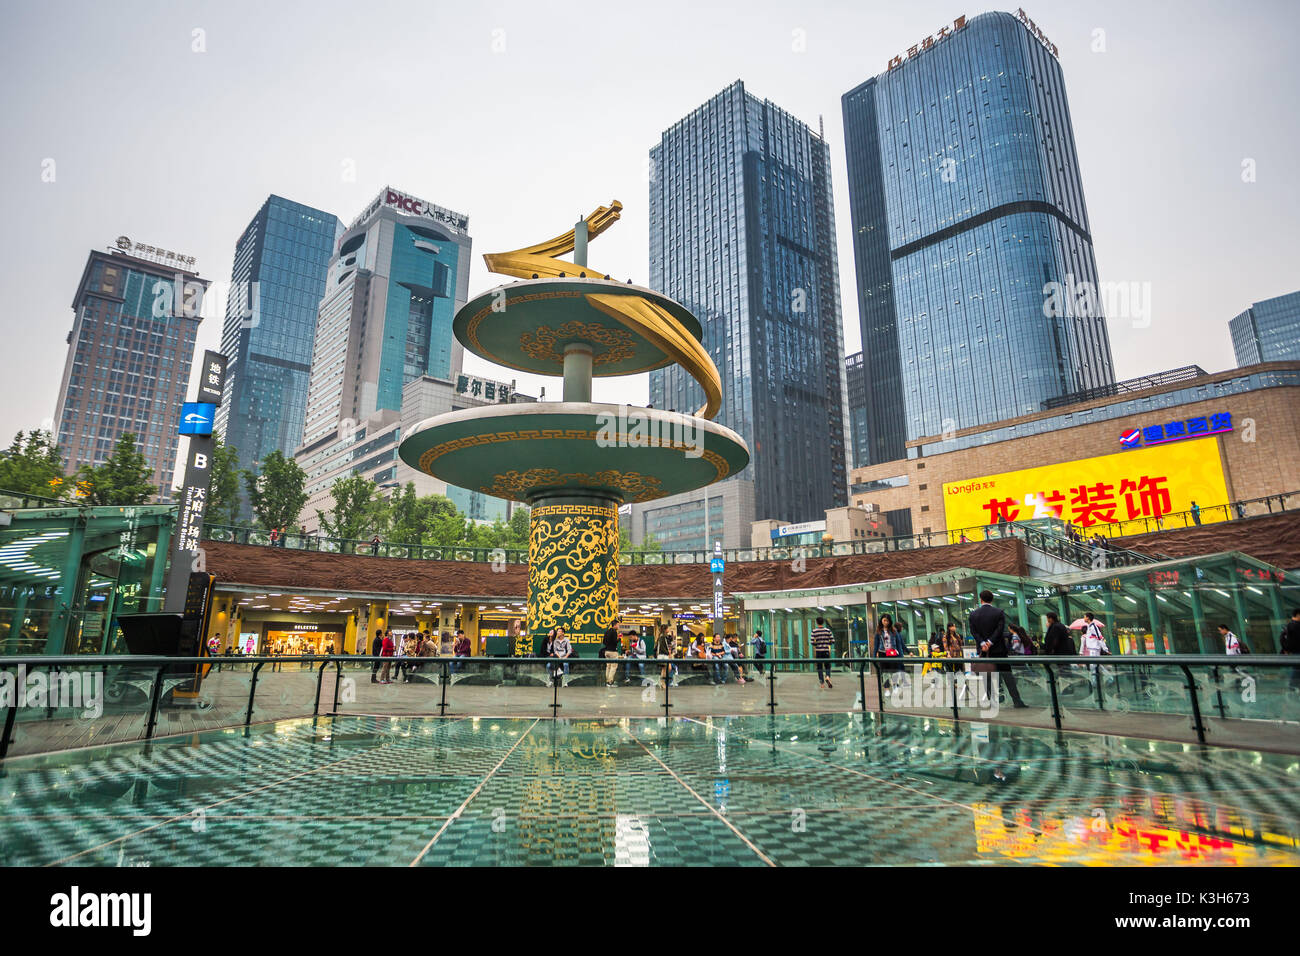 China, Sichuan Province, Chengdu City, Tianfu Square Stock Photo